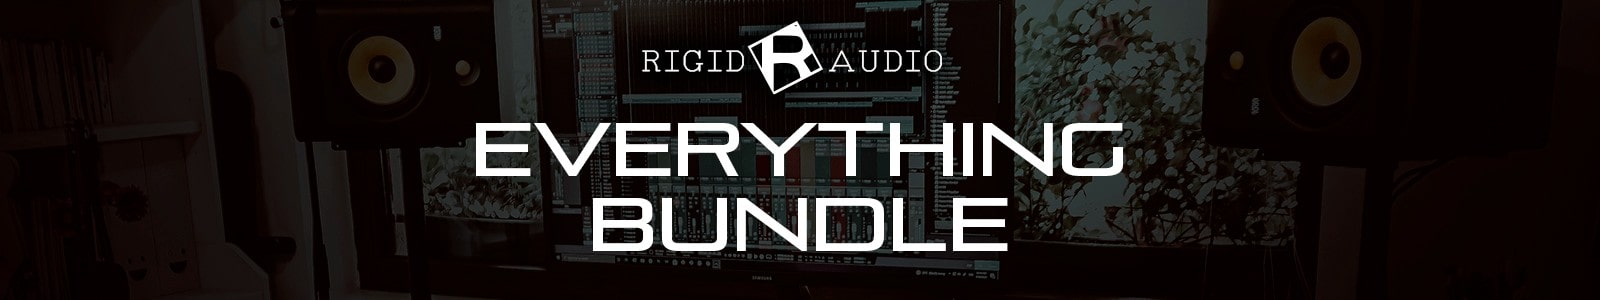 Everything Bundle by Rigid Audio